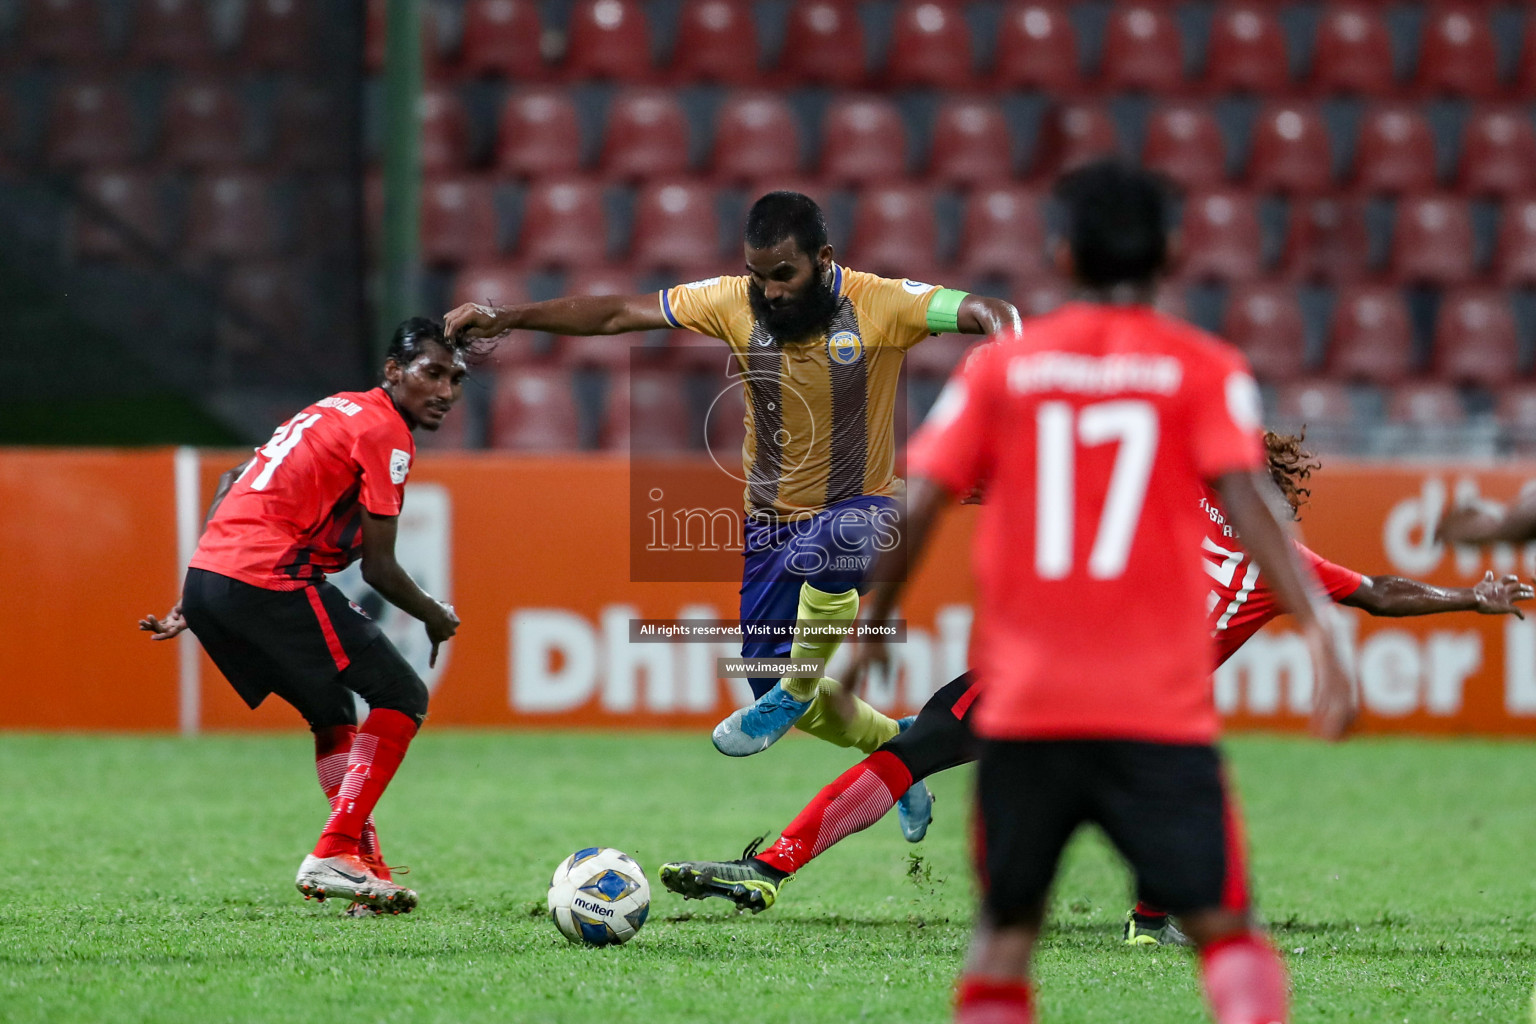 Club Valencia vs TC Sports Club in Dhiraagu Dhivehi Premier League 2020-21 on 09 January 2021 held in Male', Maldives